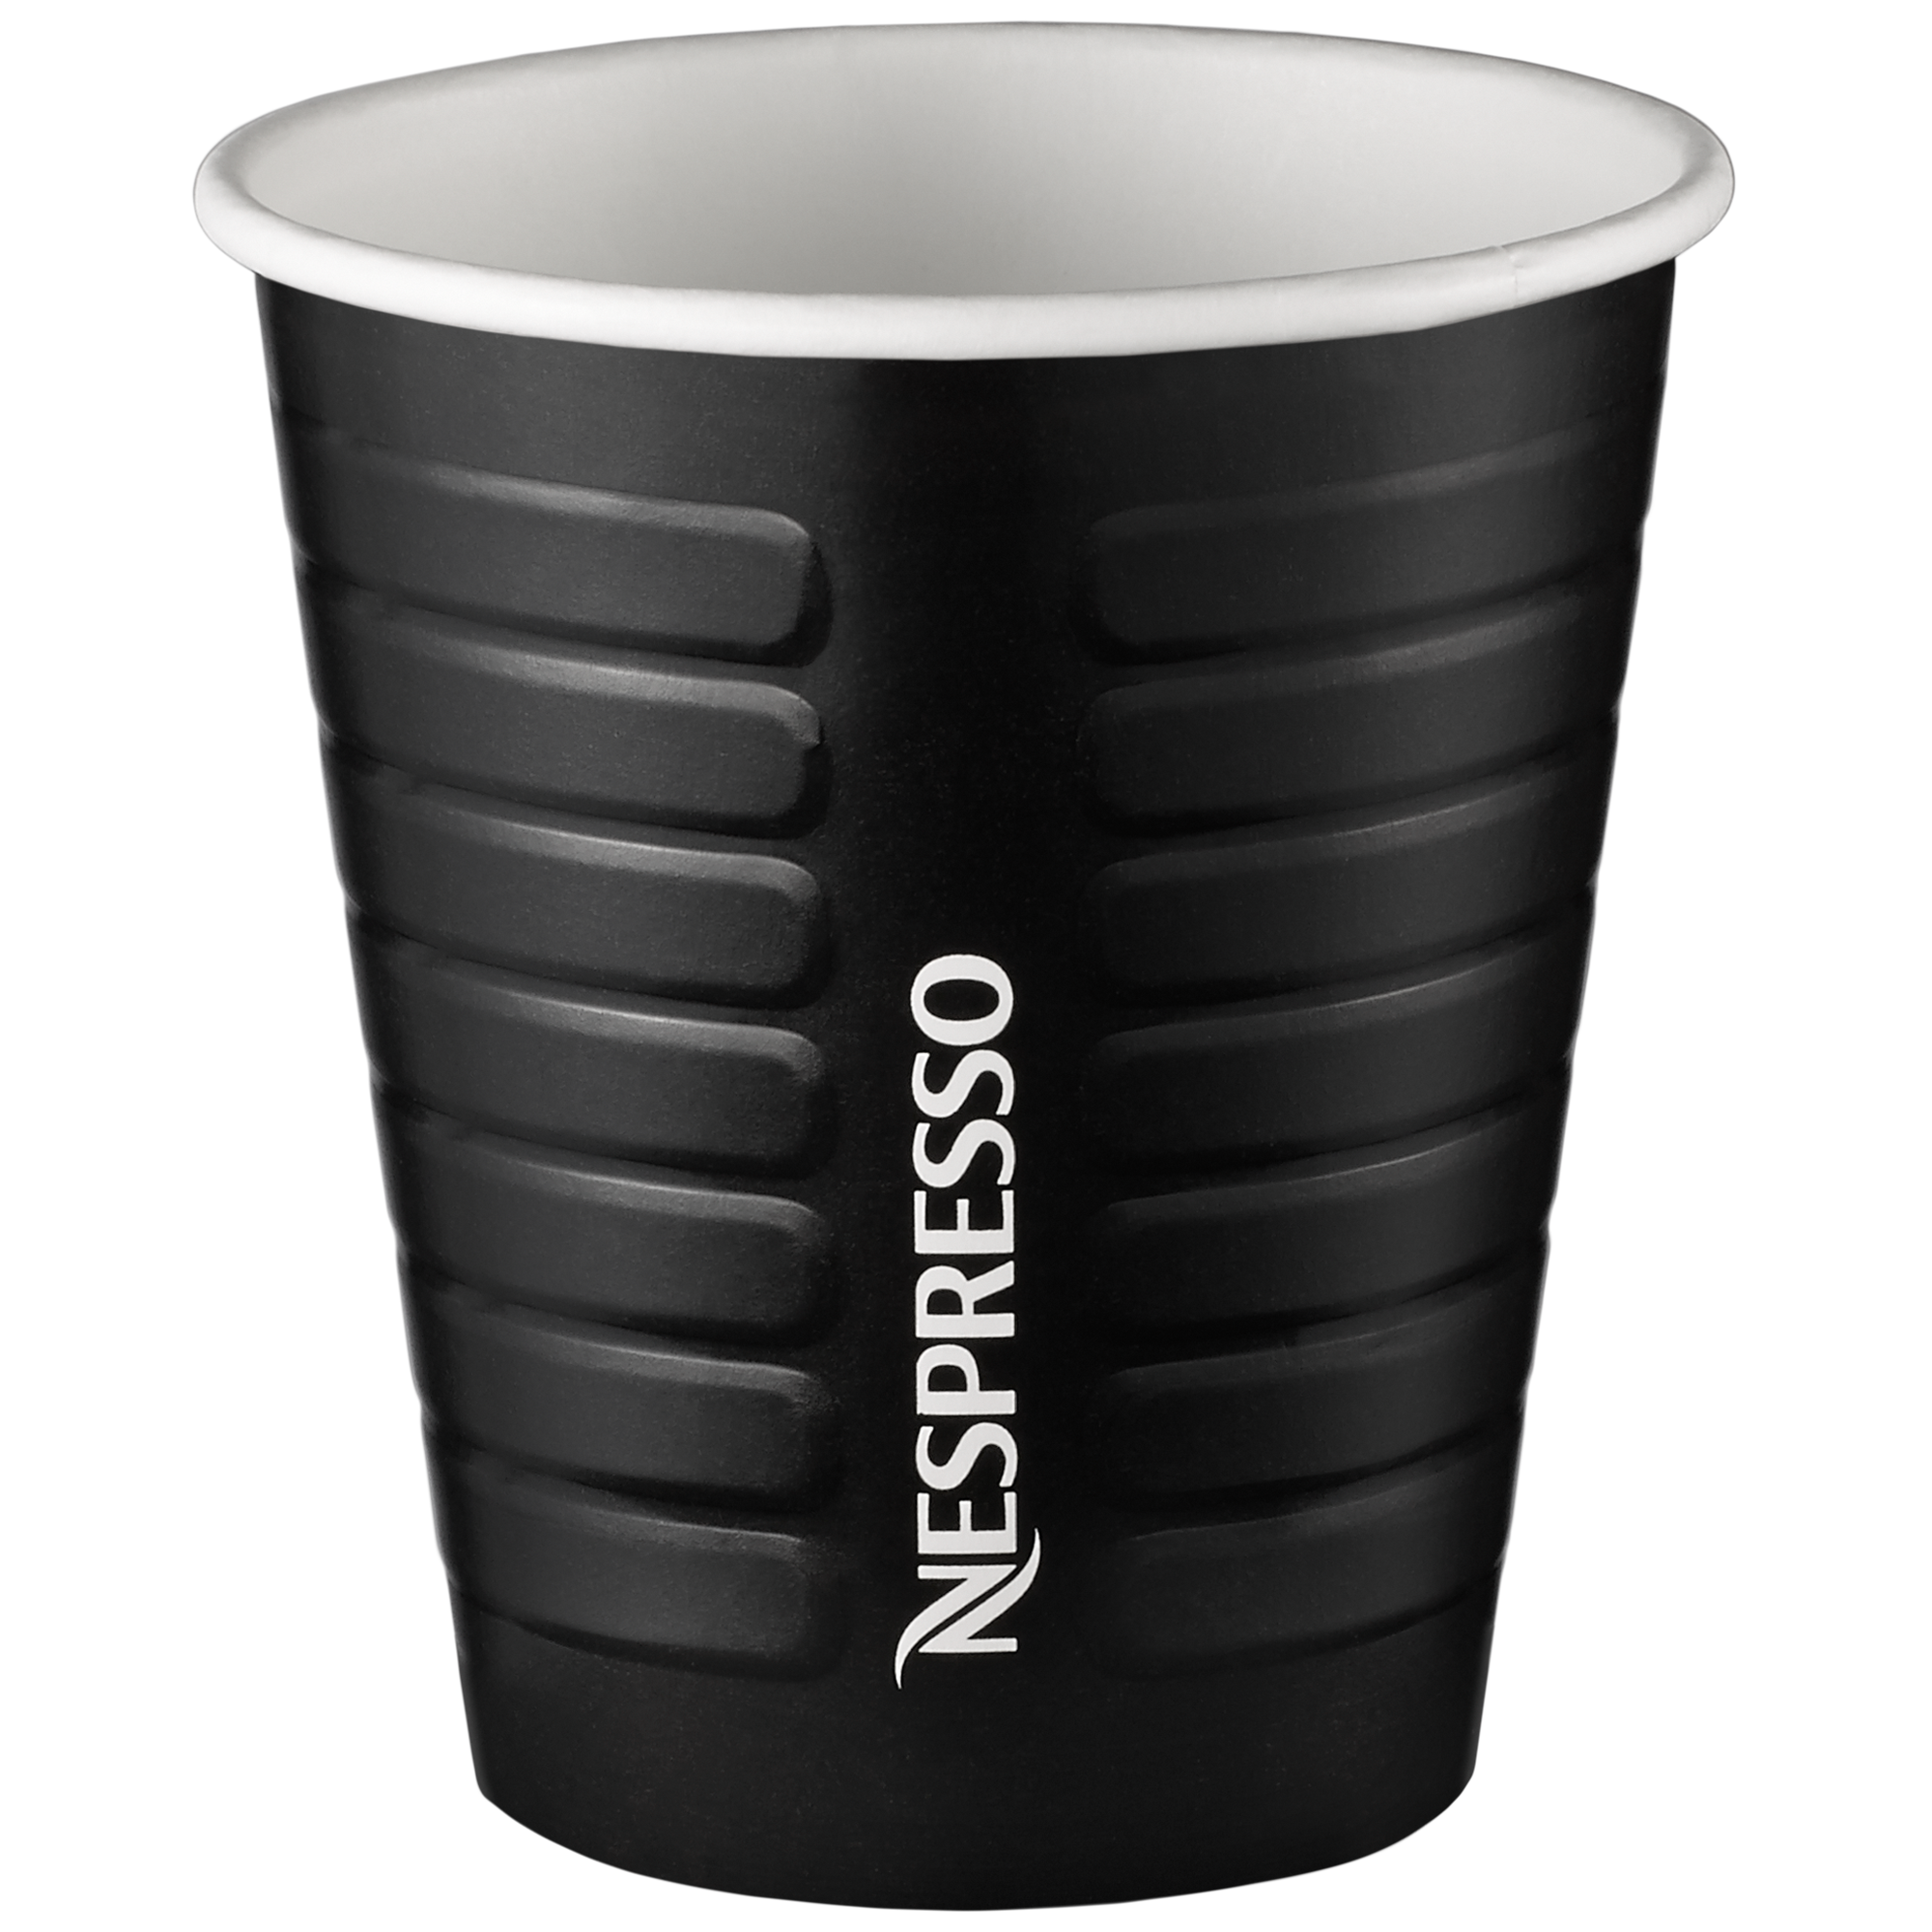 Capsule compatible Nespresso - Cafe Royal - Lungo Forte X36